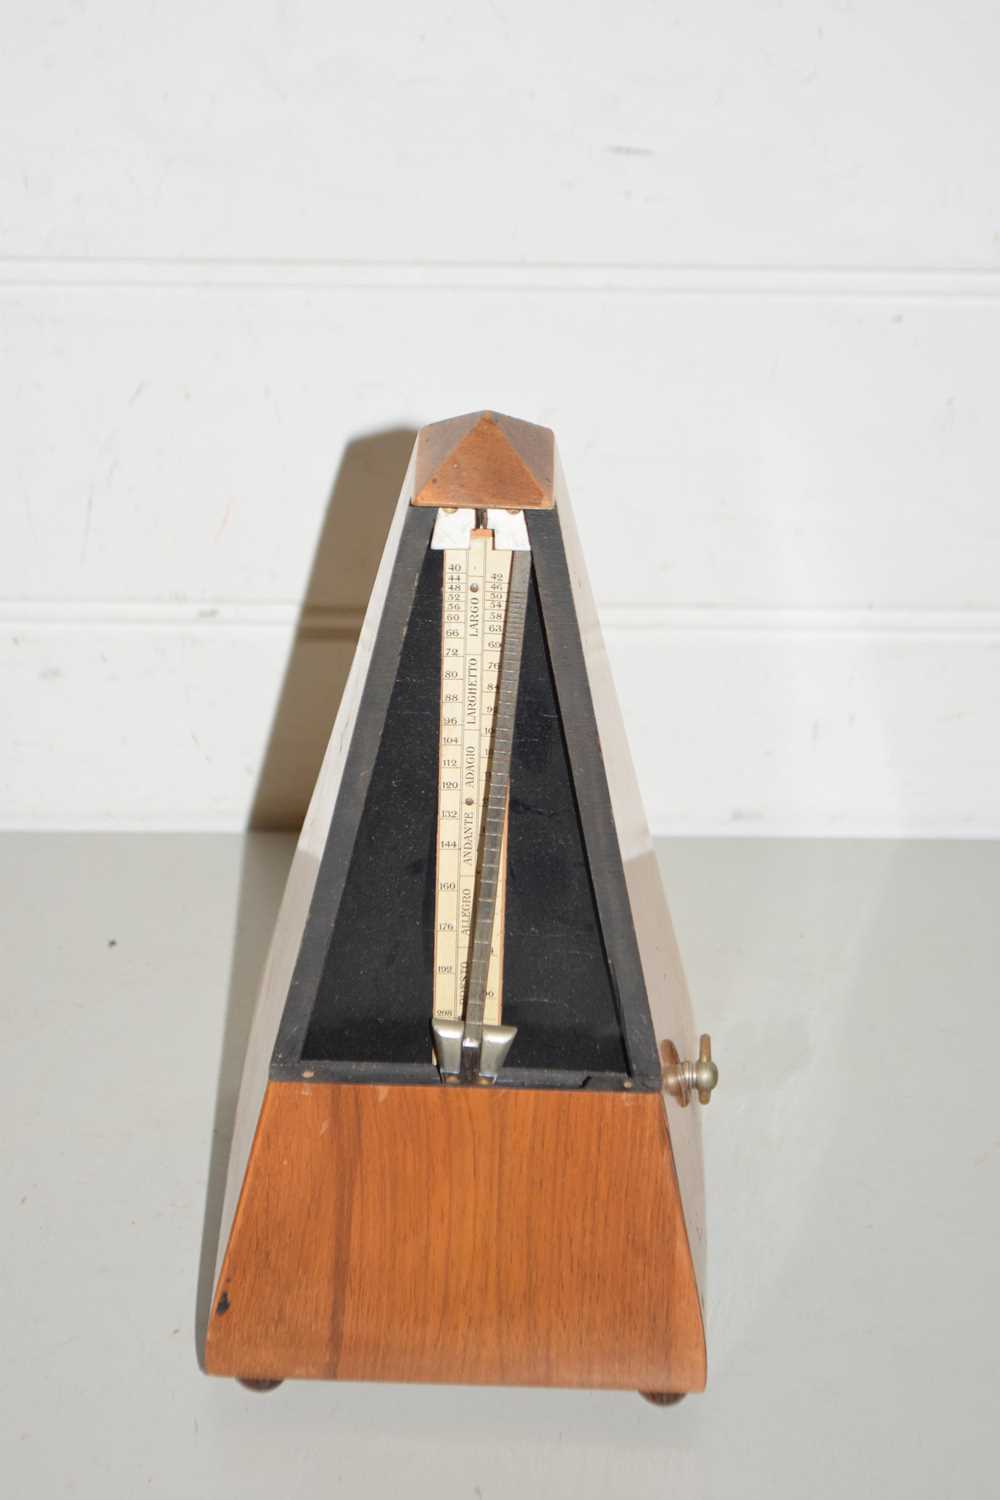 Vintage hardwood cased metronome